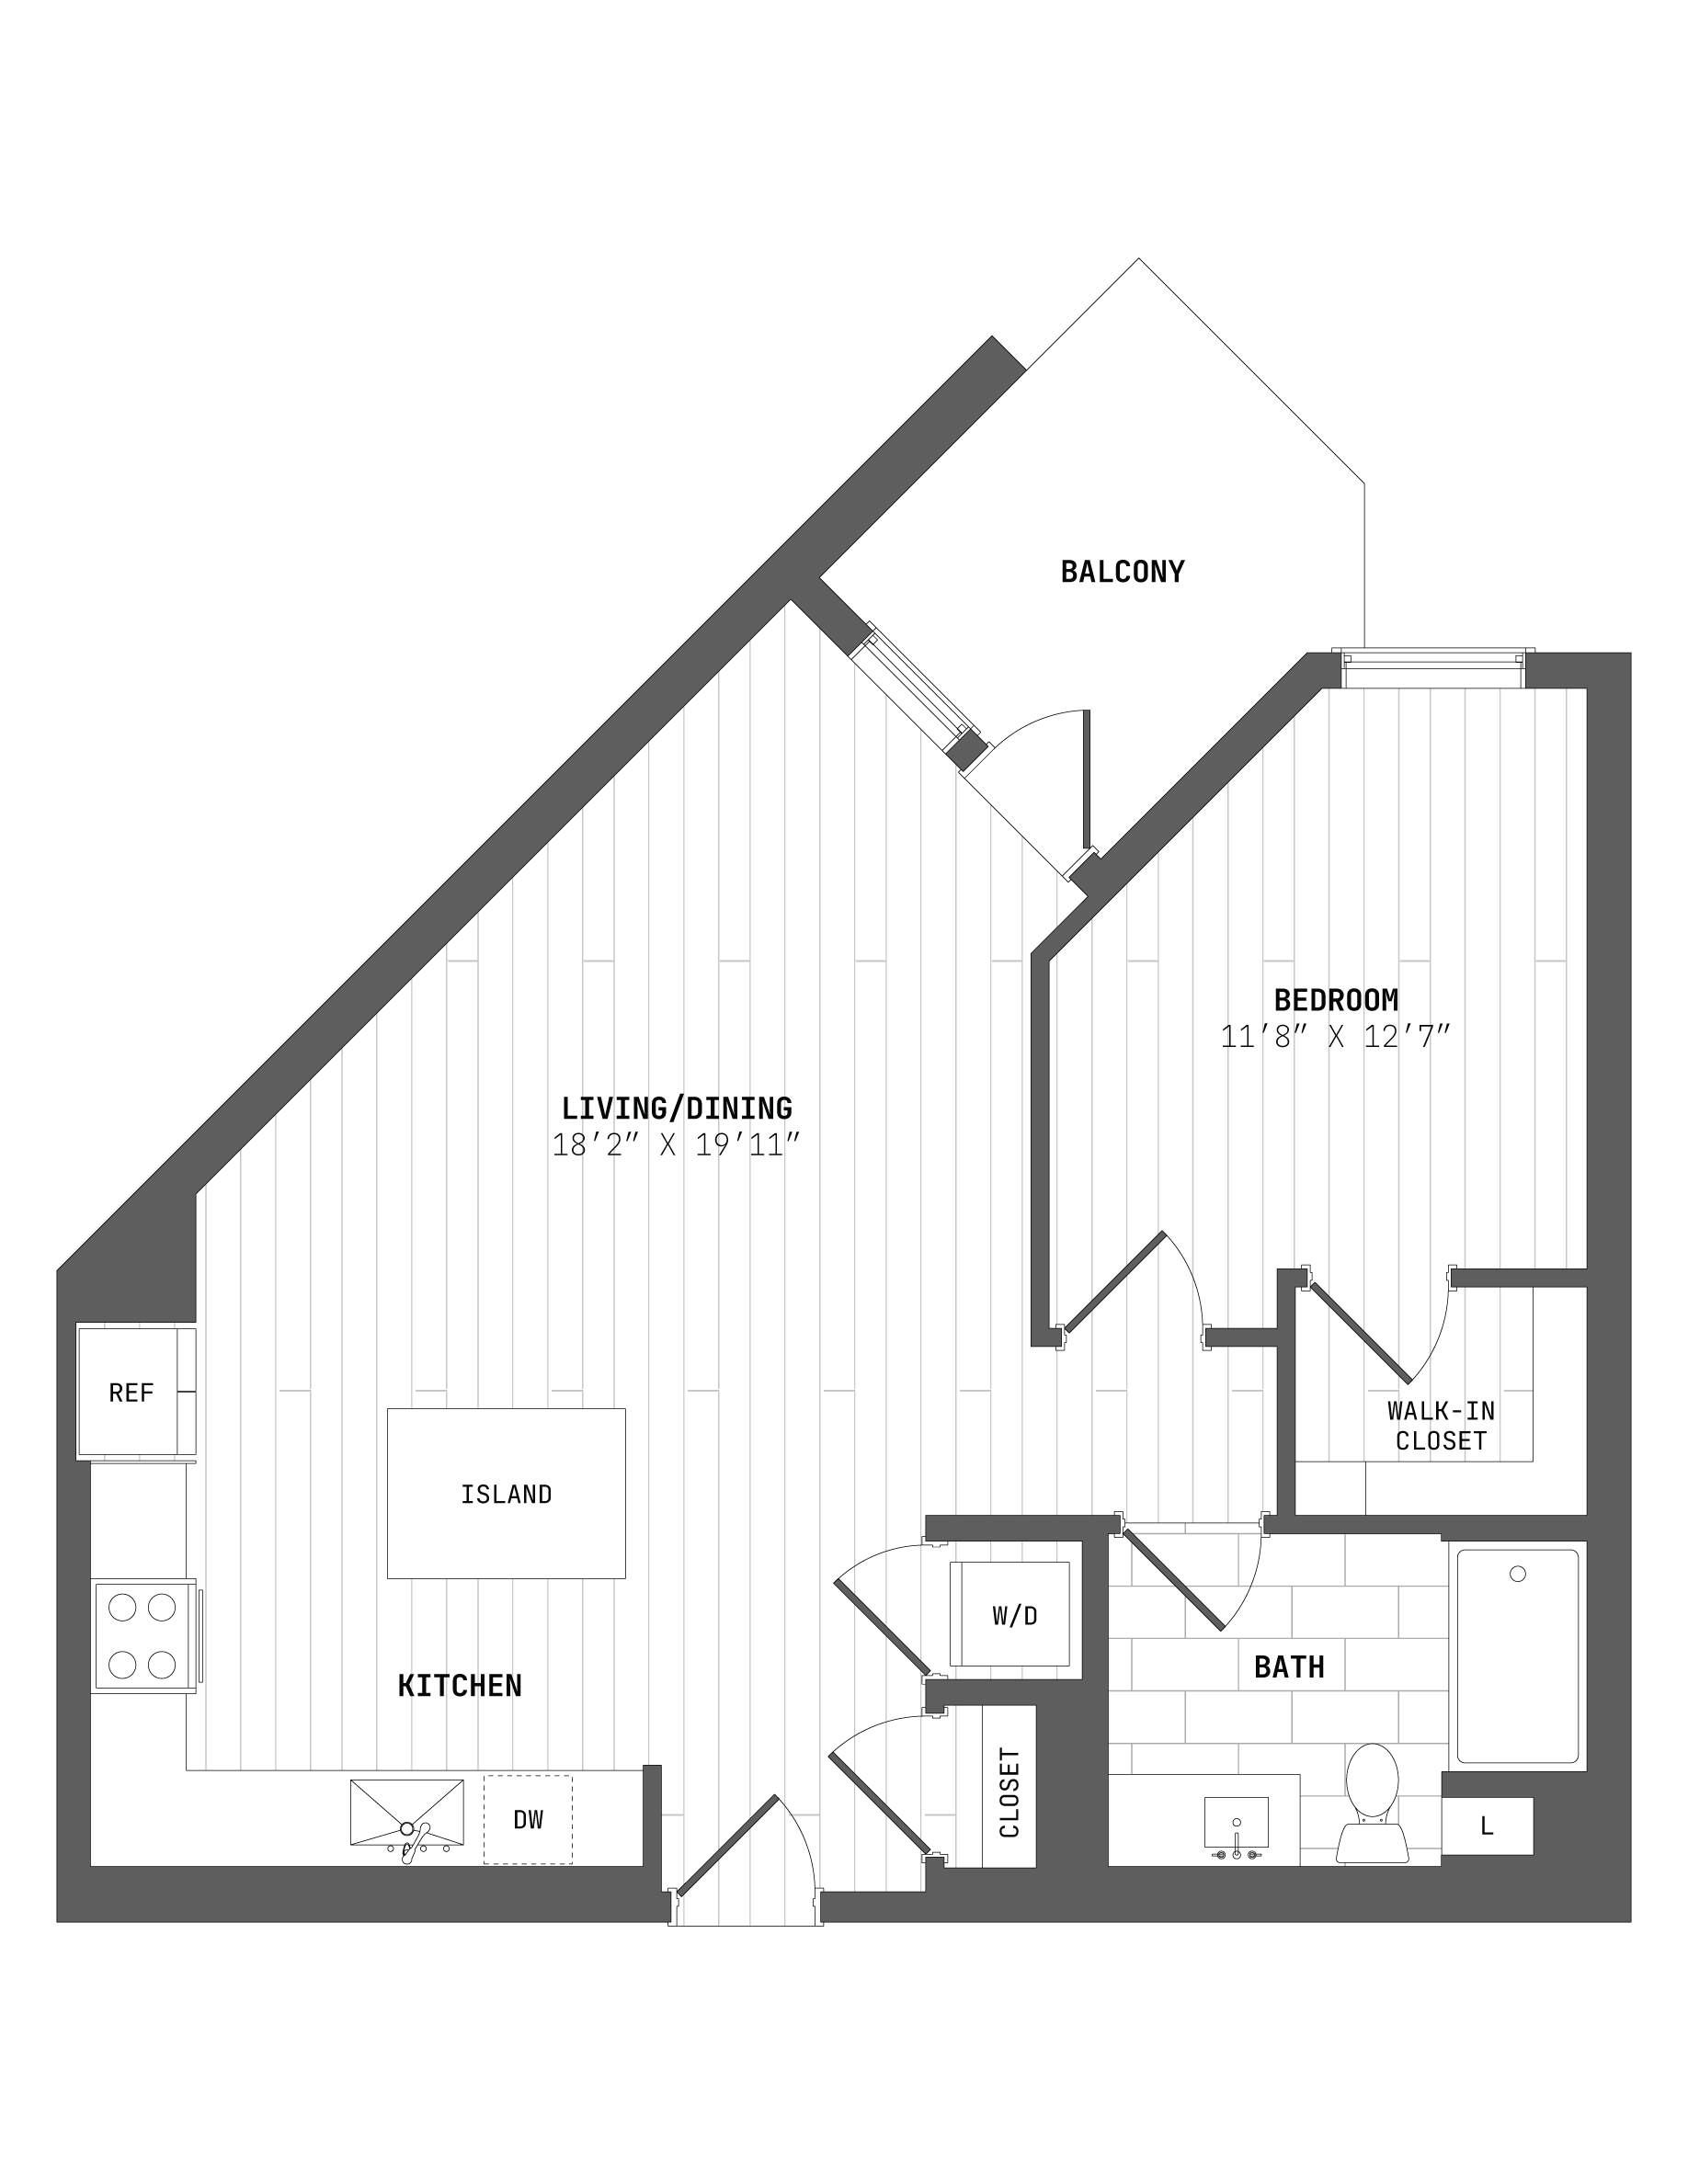 Apartment 4785237 floorplan